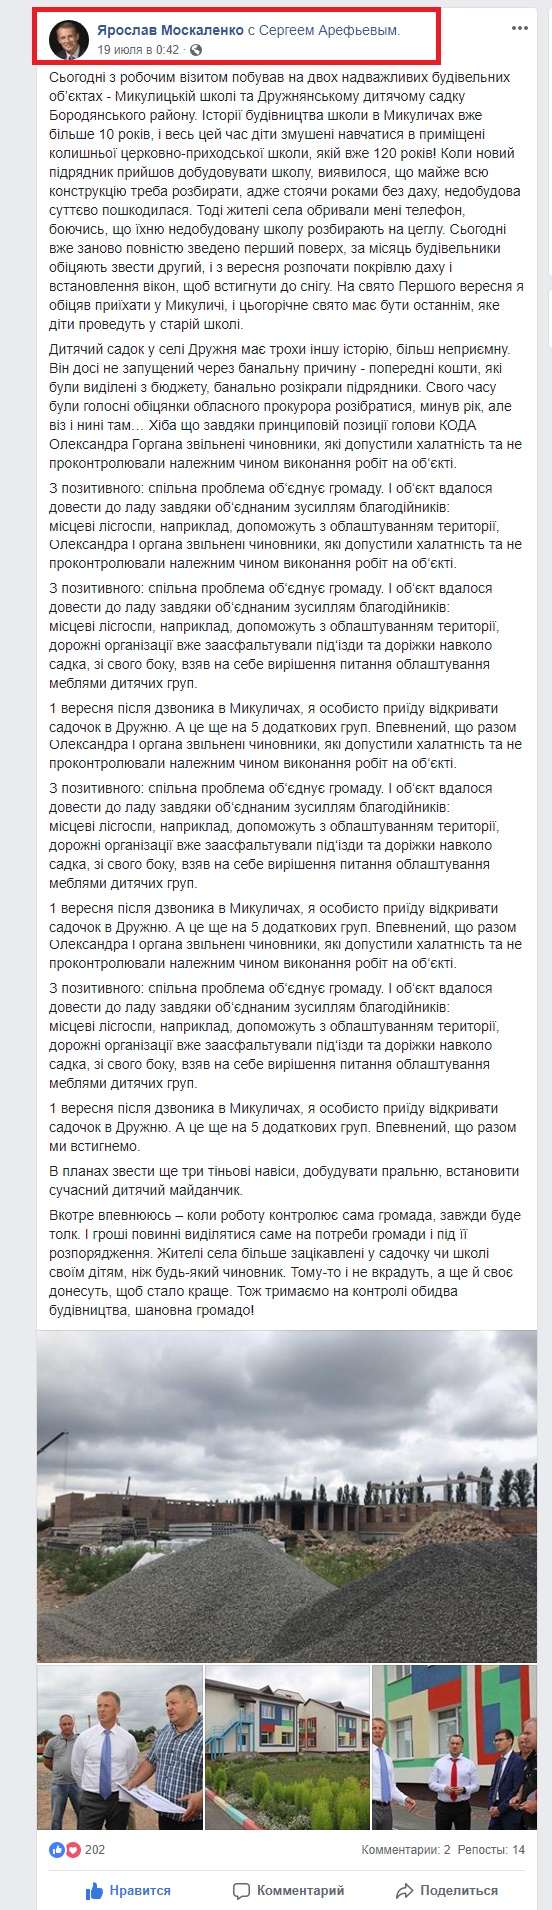 https://www.facebook.com/yarmoskalenko/posts/1106701412803752